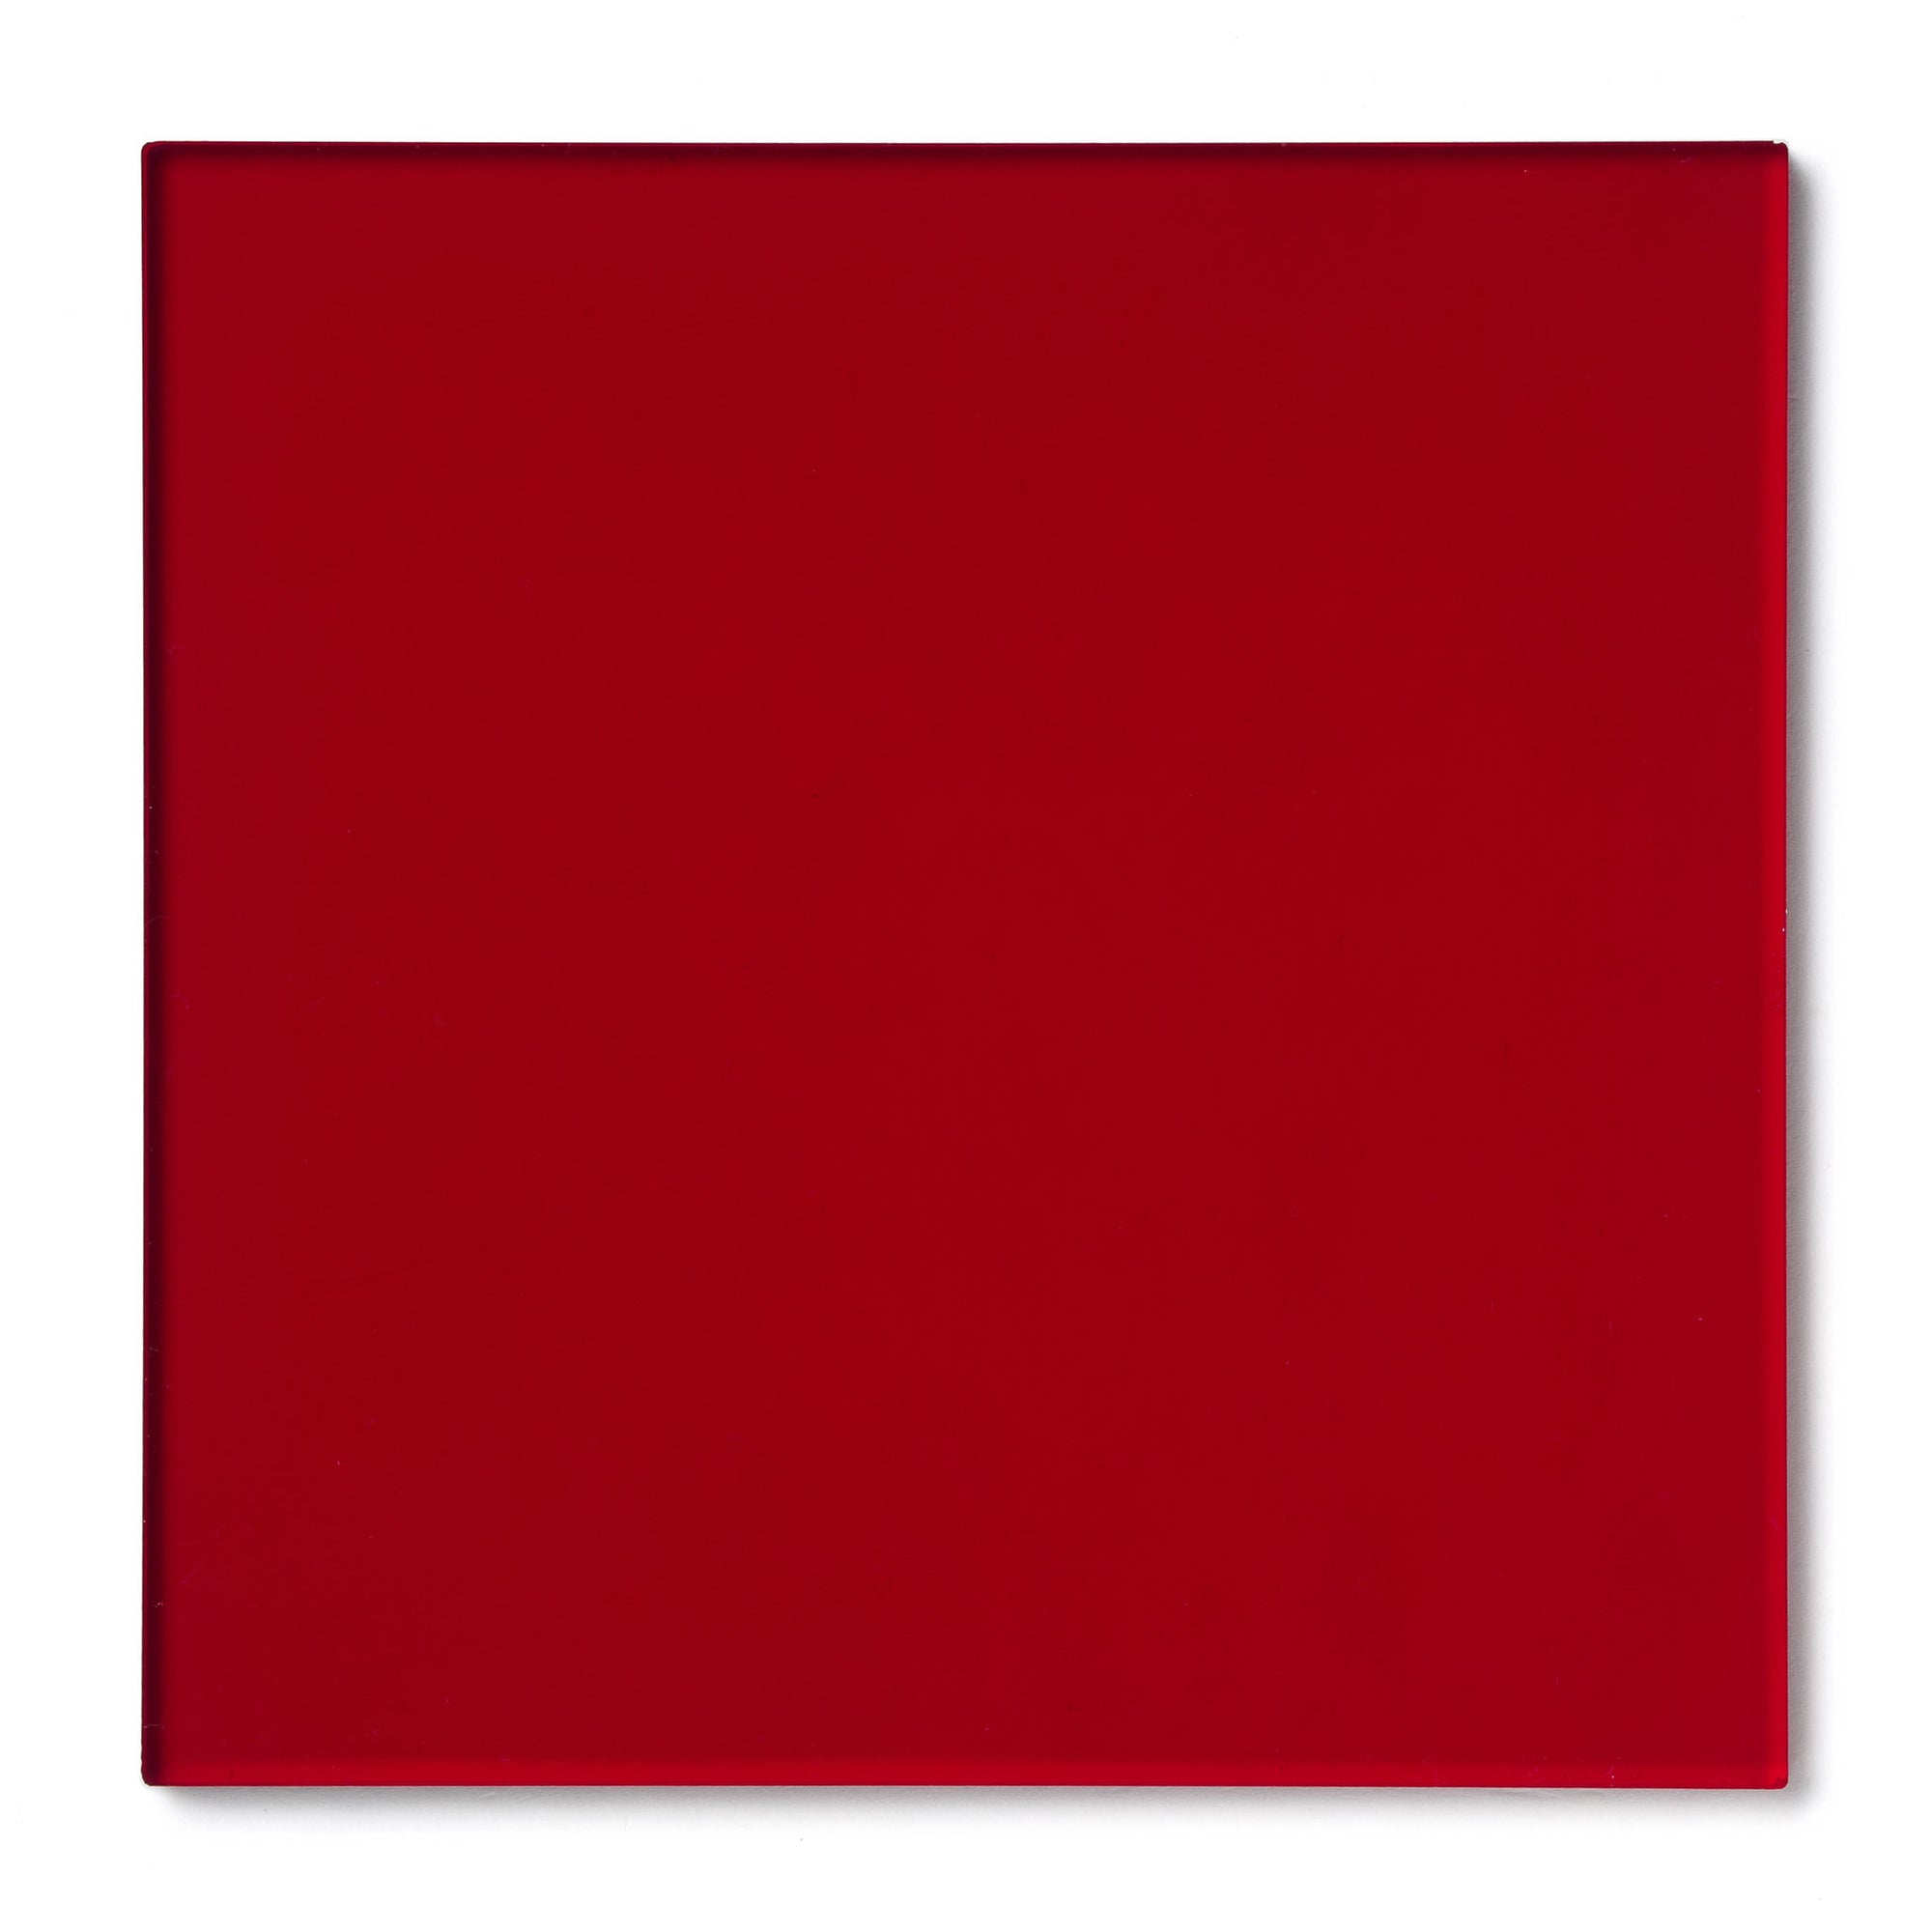 Red Transparent Acrylic Plexiglass Sheet, Swatch view